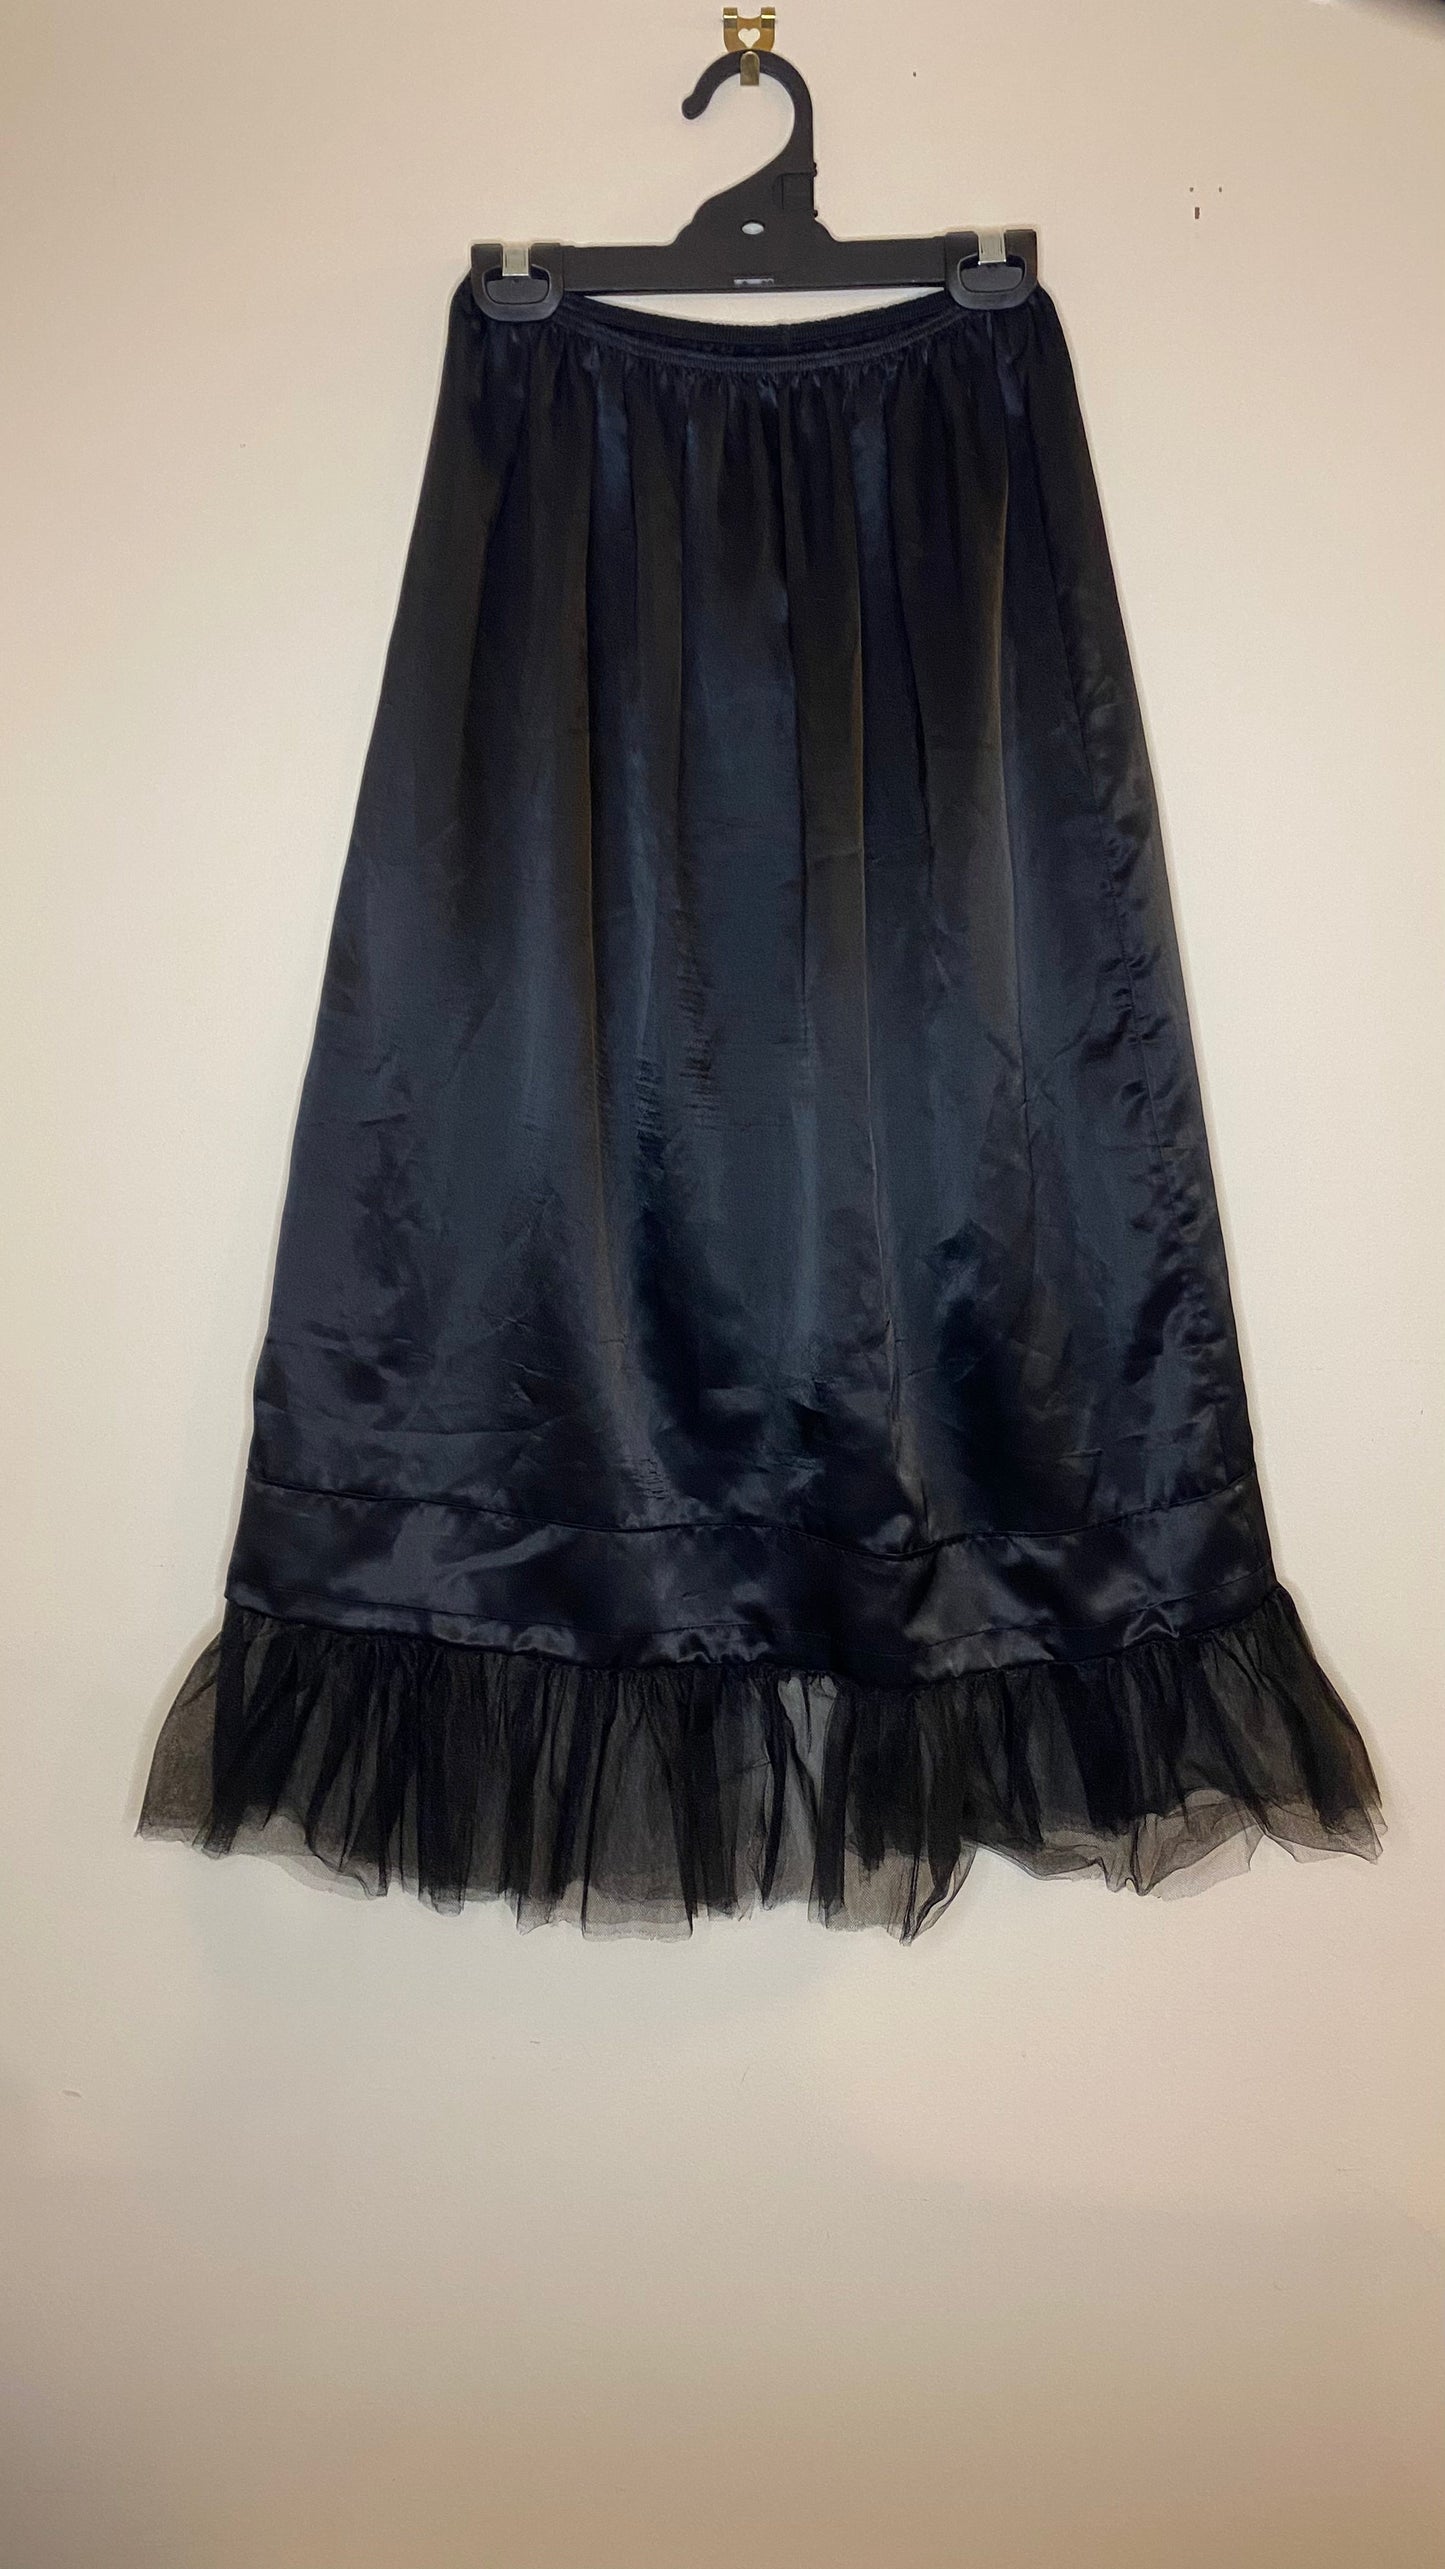 Stunning Black Skirt - Getting Thrifty